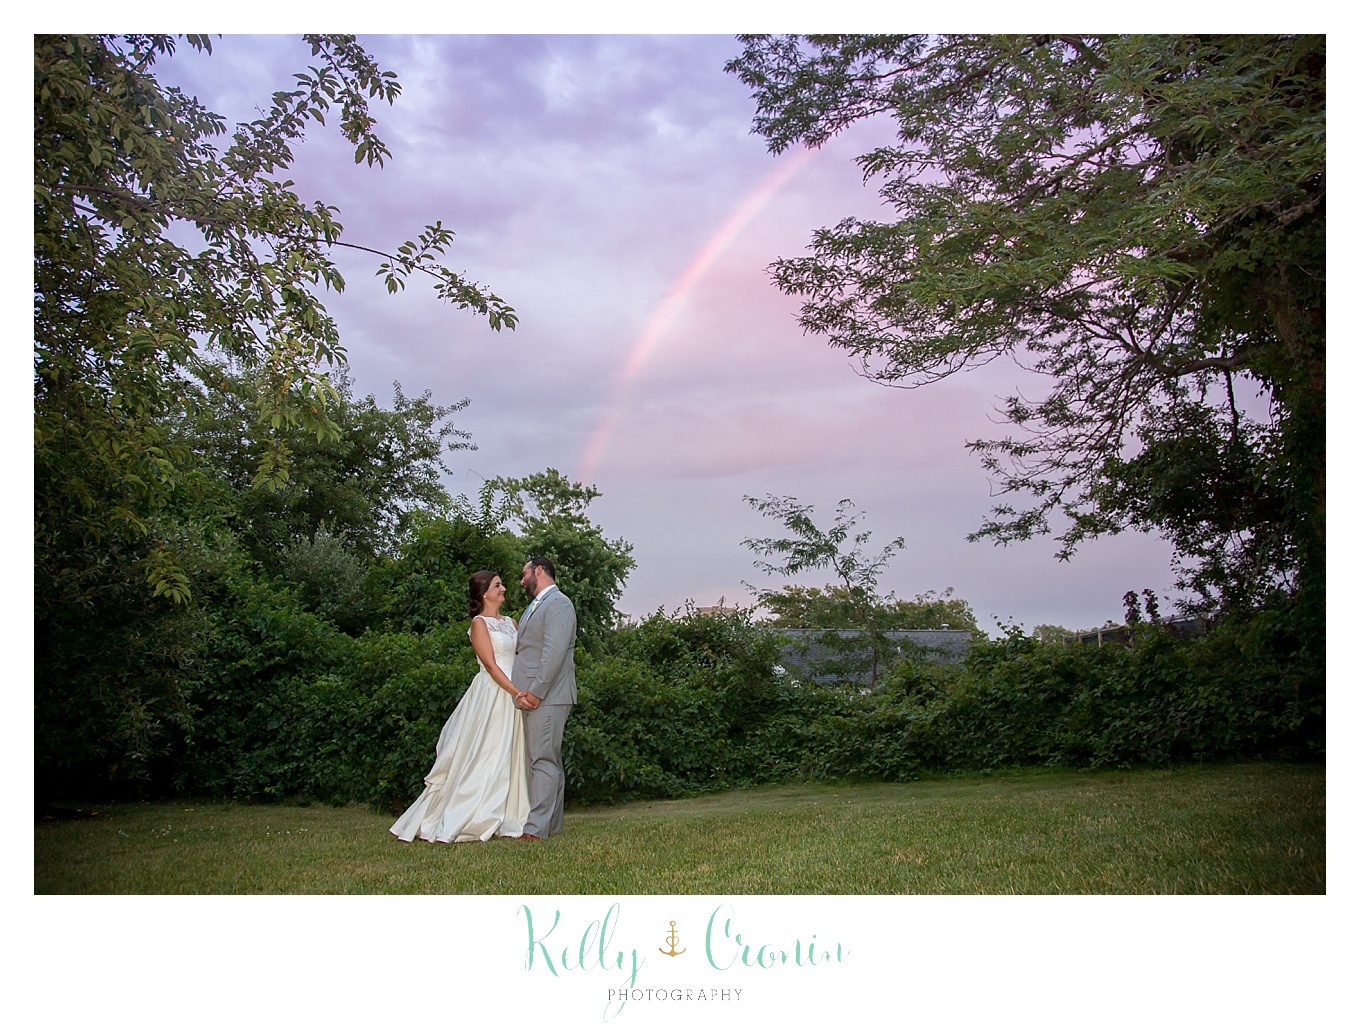 A groom kisses his bride under a bright rainbow.